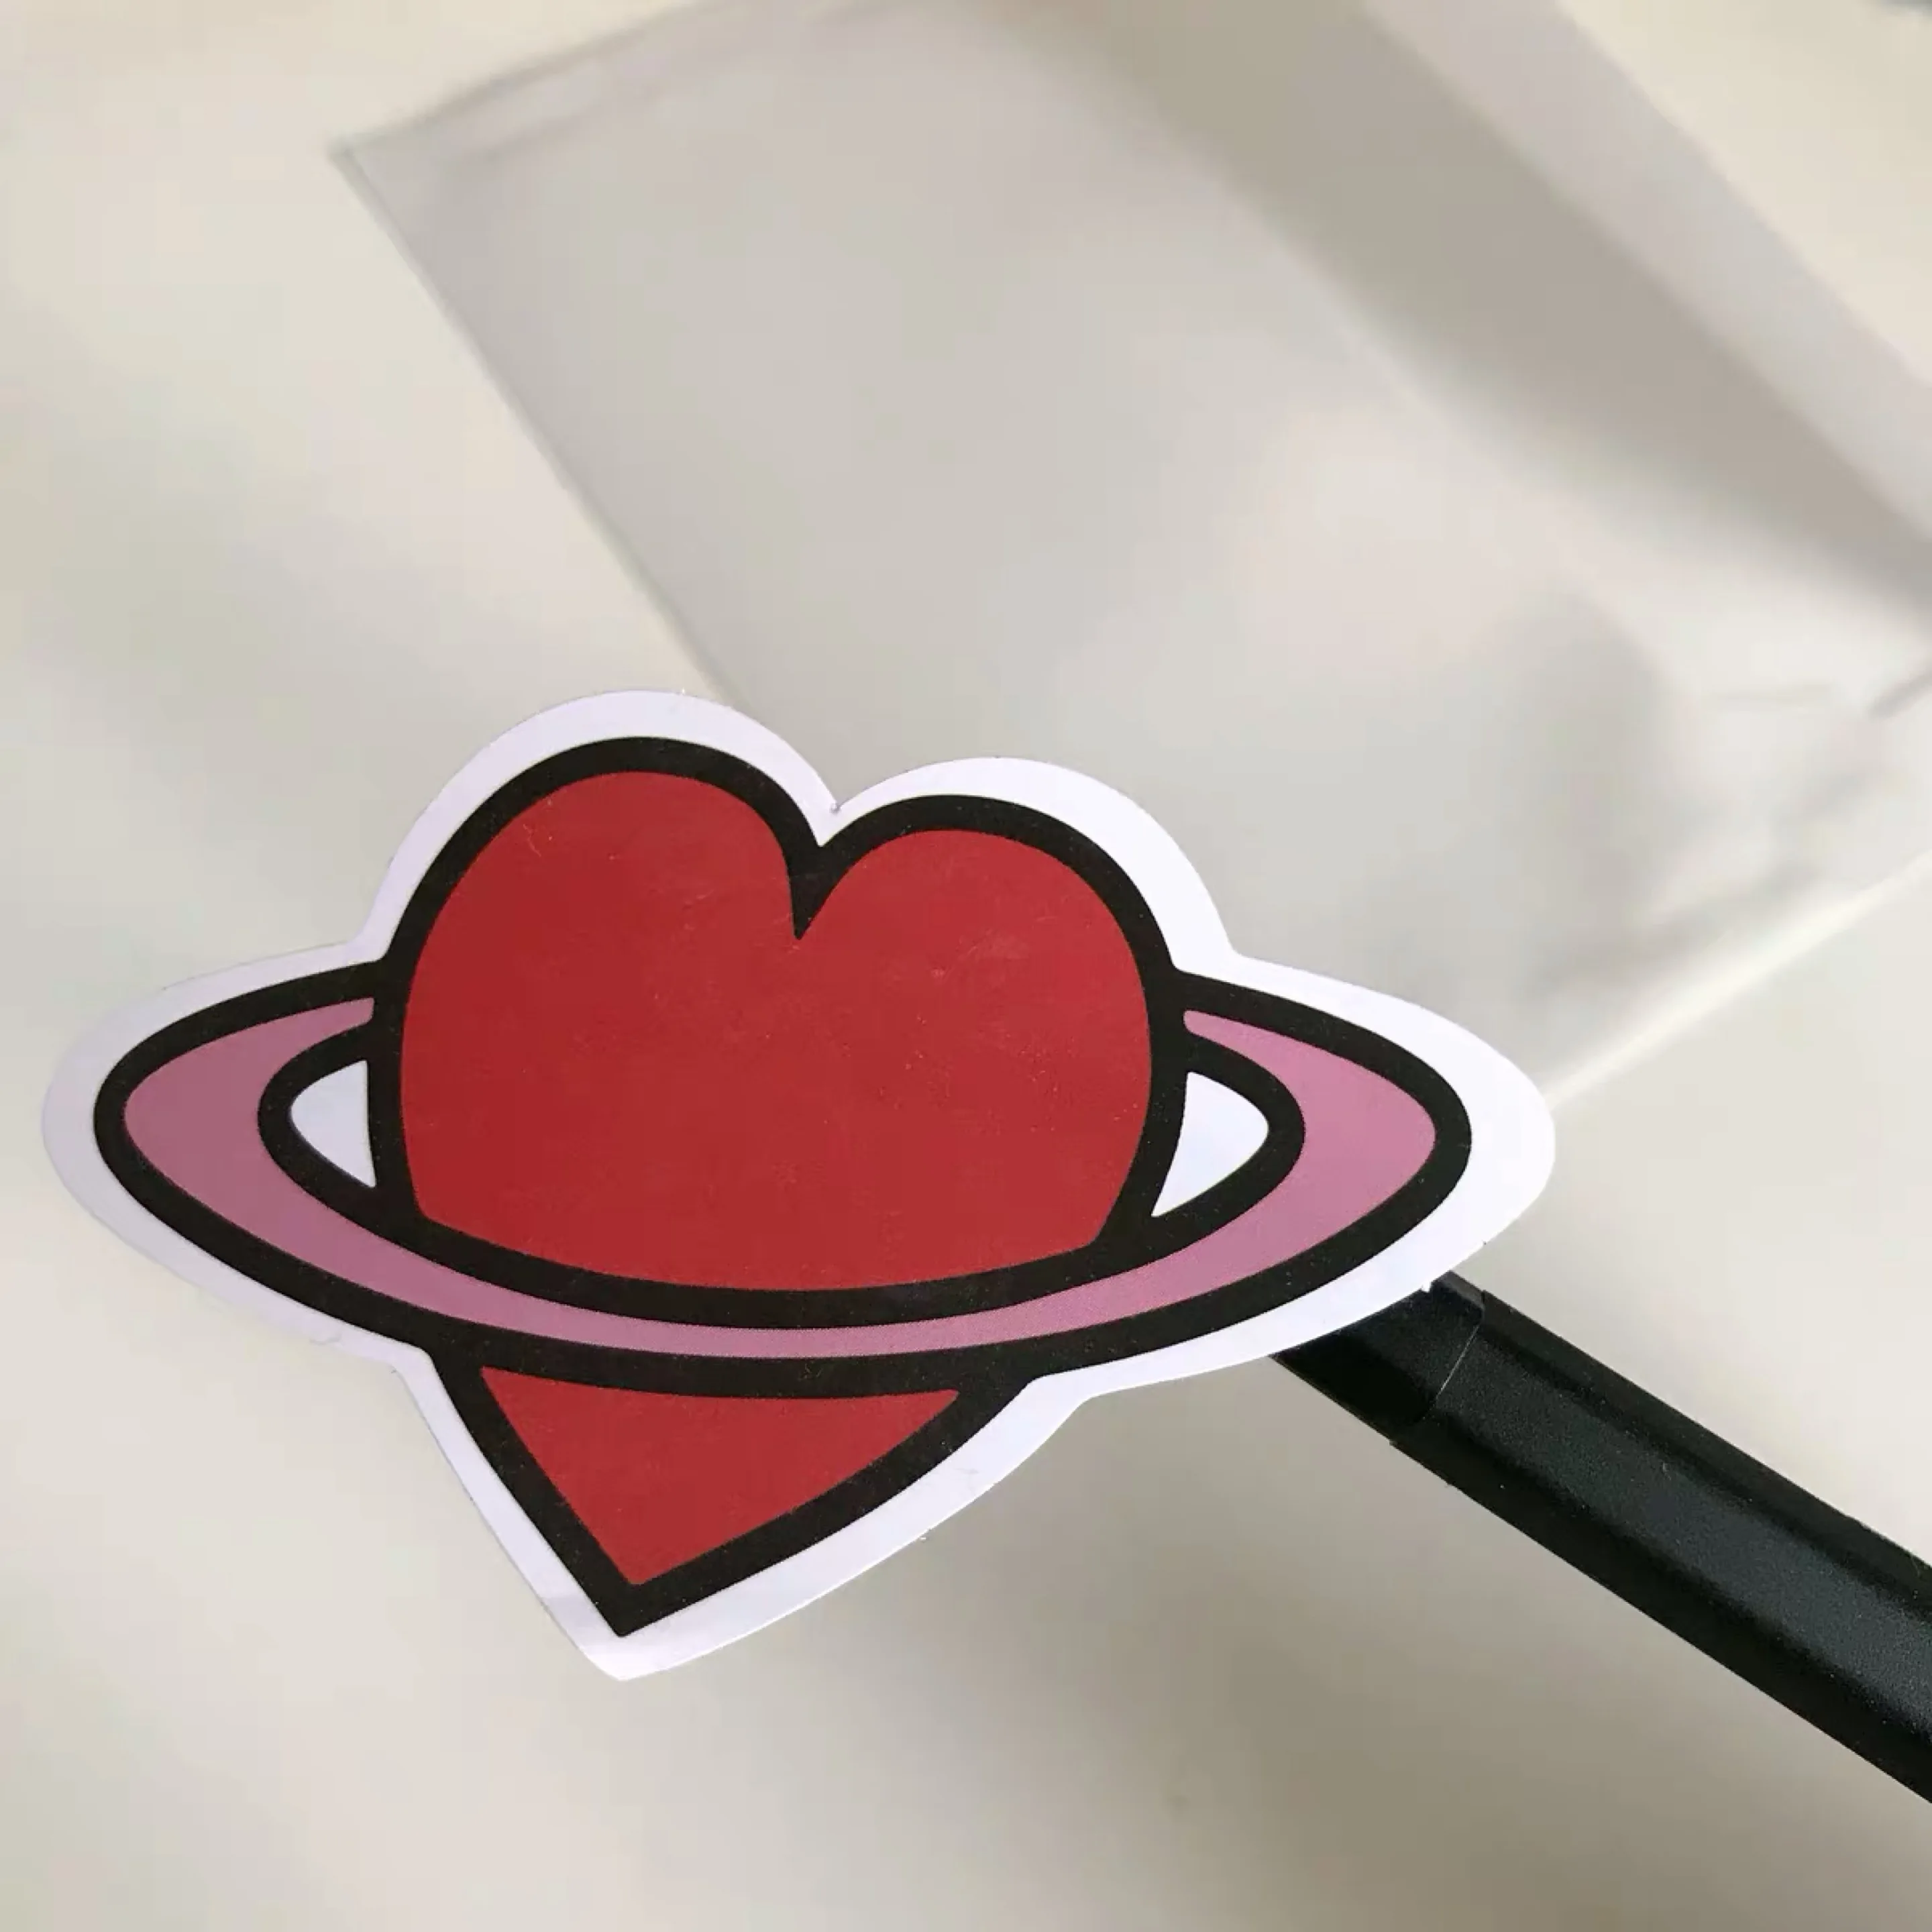 8pcs Ins Lovely Heart Creative Decorative Sticker Korean Label Diary Album Kawaii Phone Stickers DIY Scrapbooking Stationery